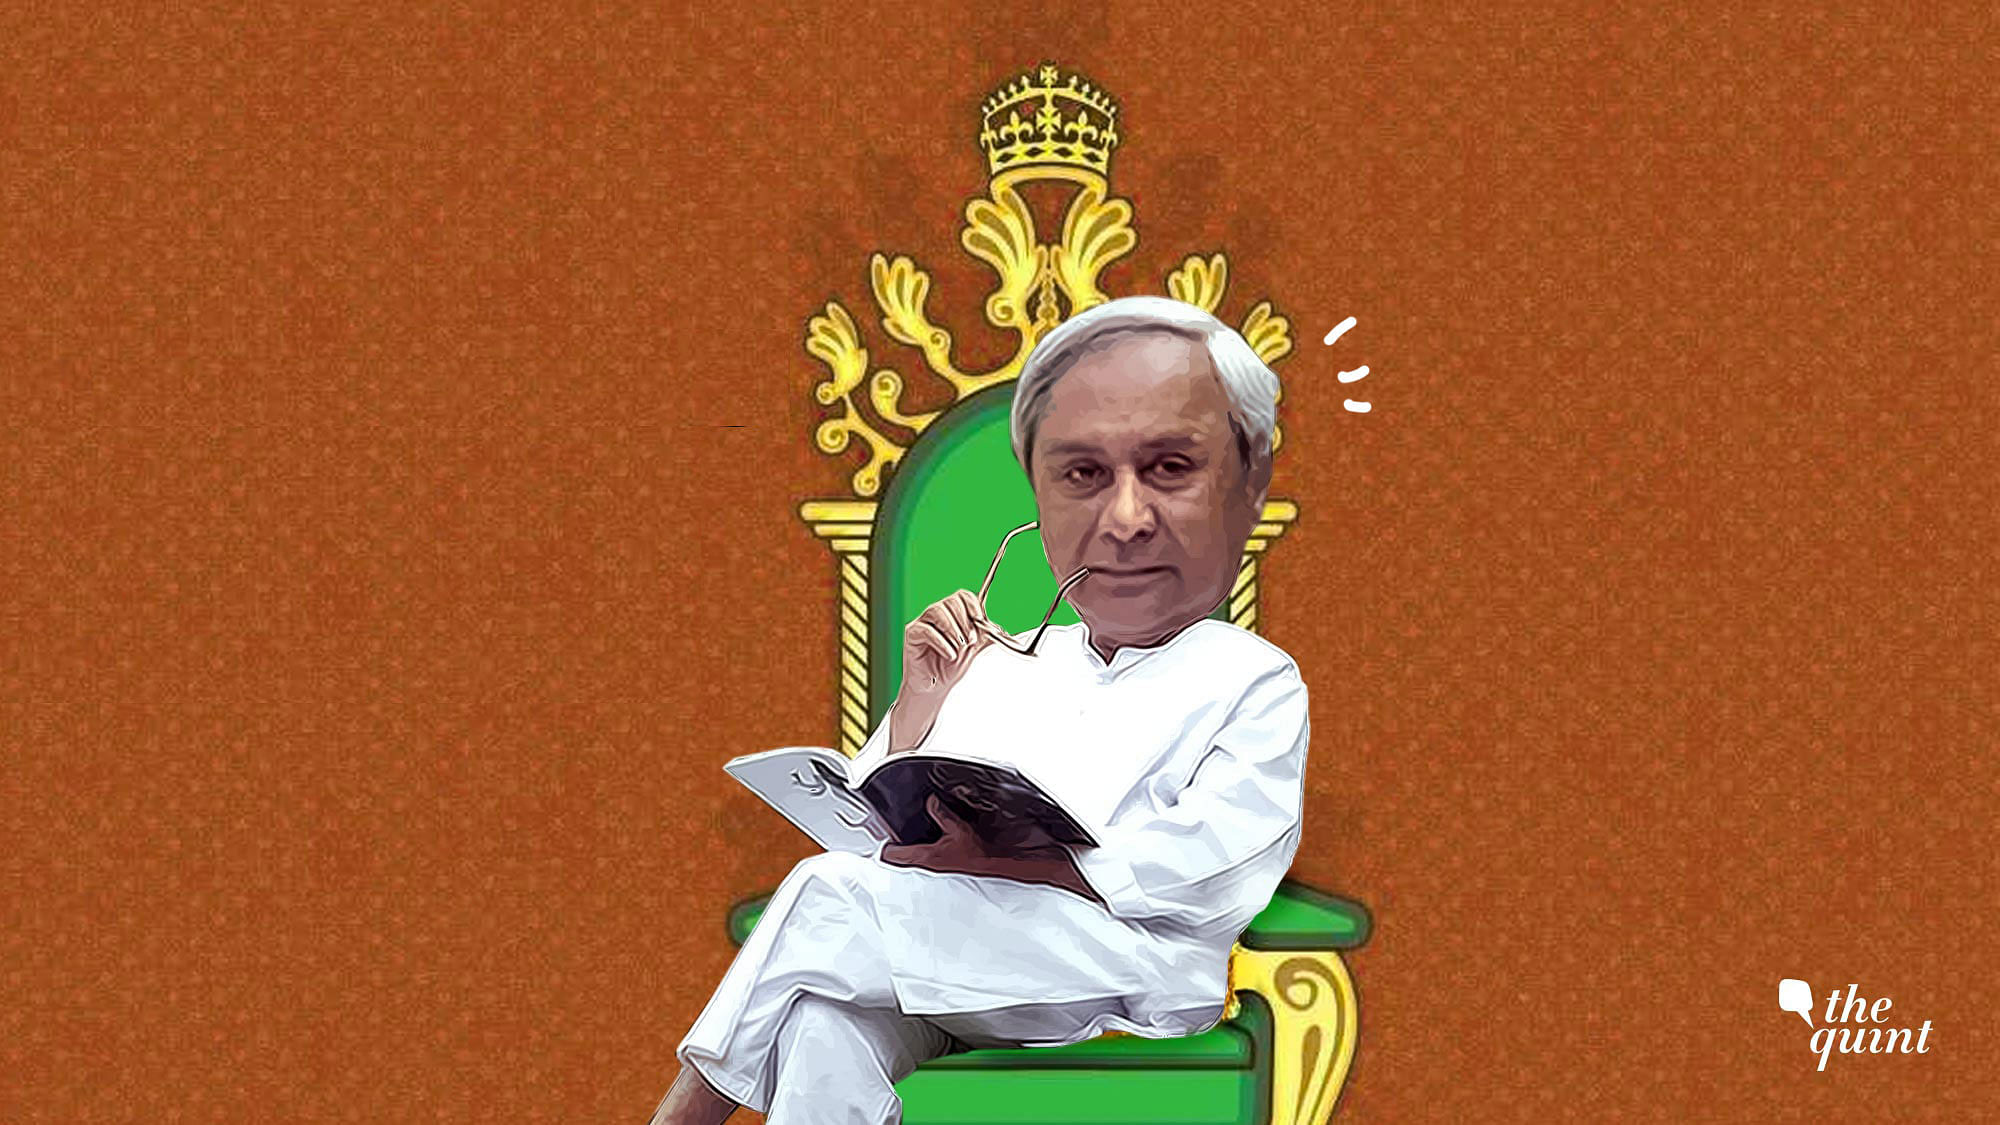 Image of Odisha CM Naveen Patnaik used for representational purposes.